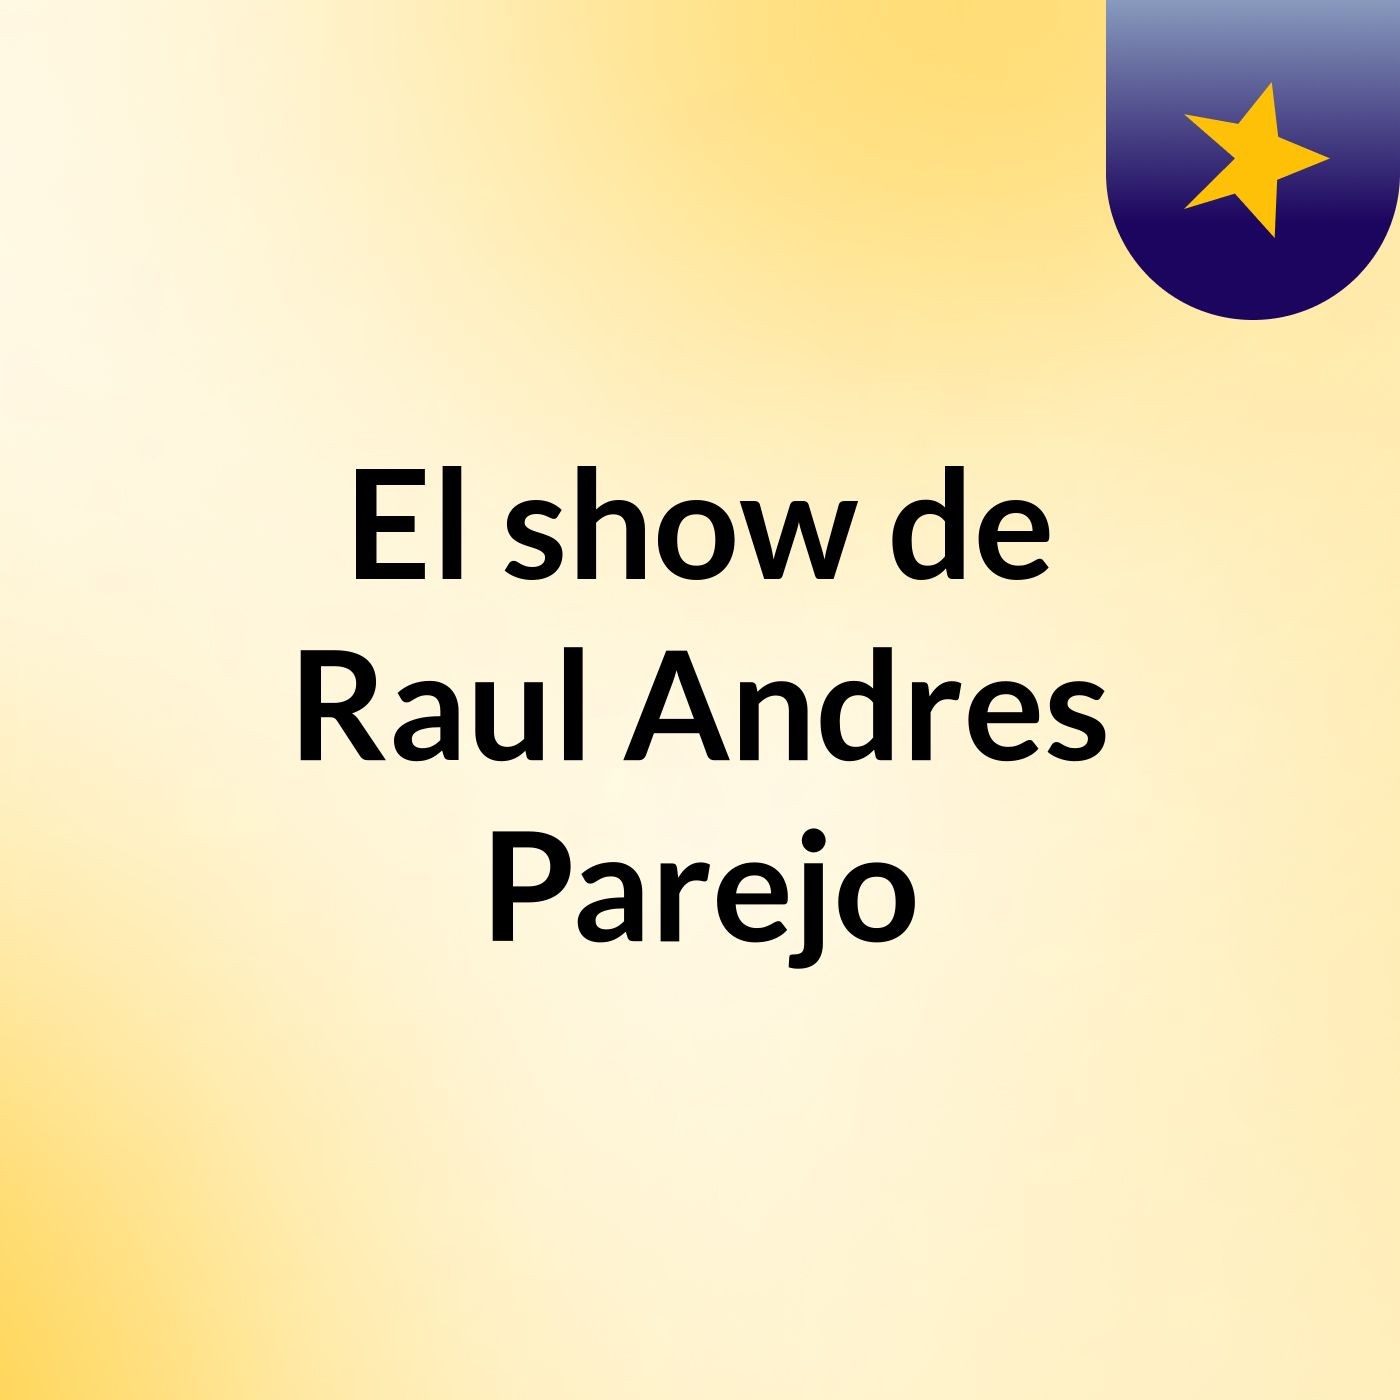 El show de Raul Andres Parejo